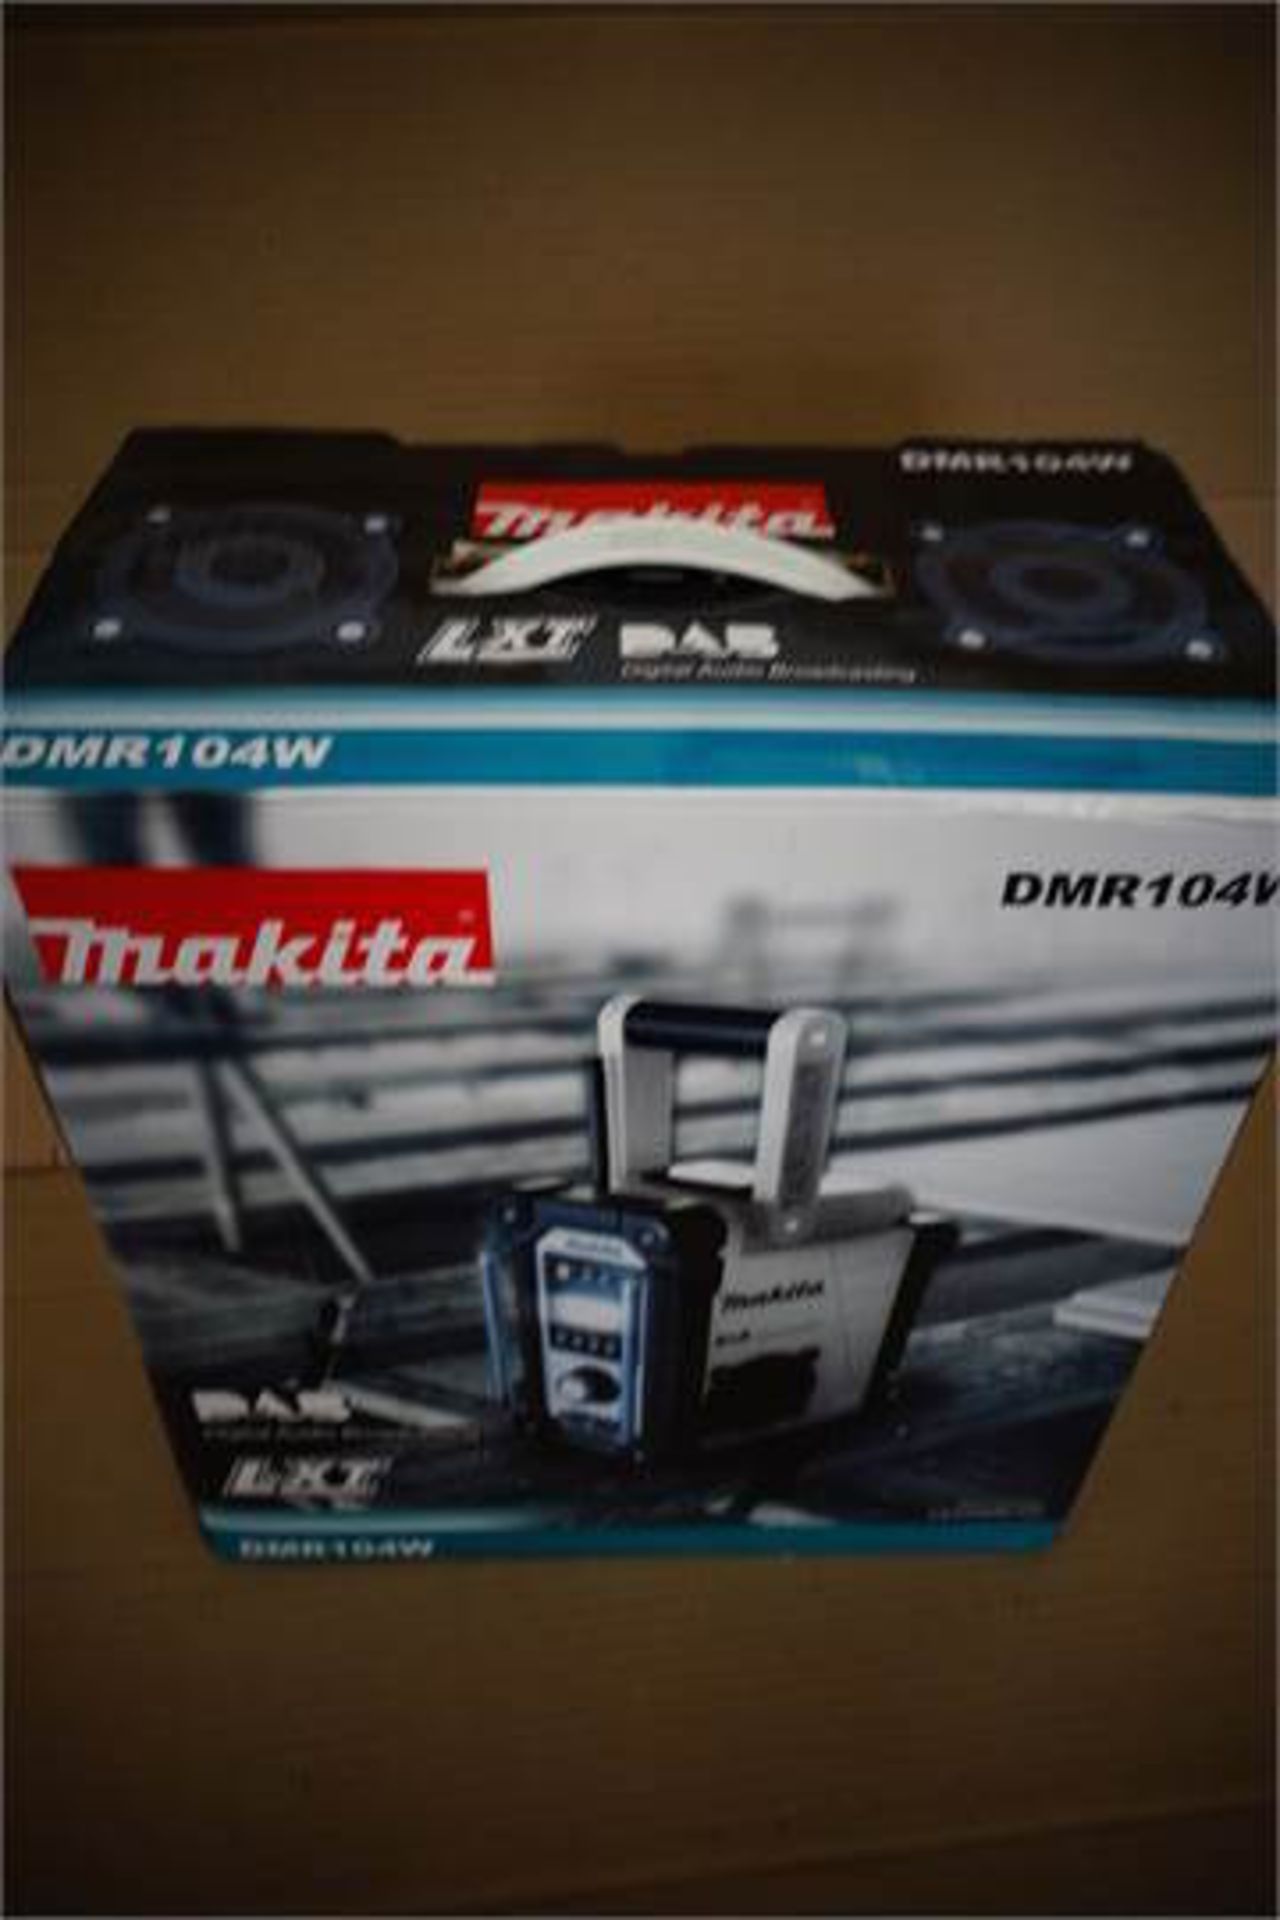 Makita DMR104W DAB/FM Radio White 240v. As new. Note: No adaptor included.